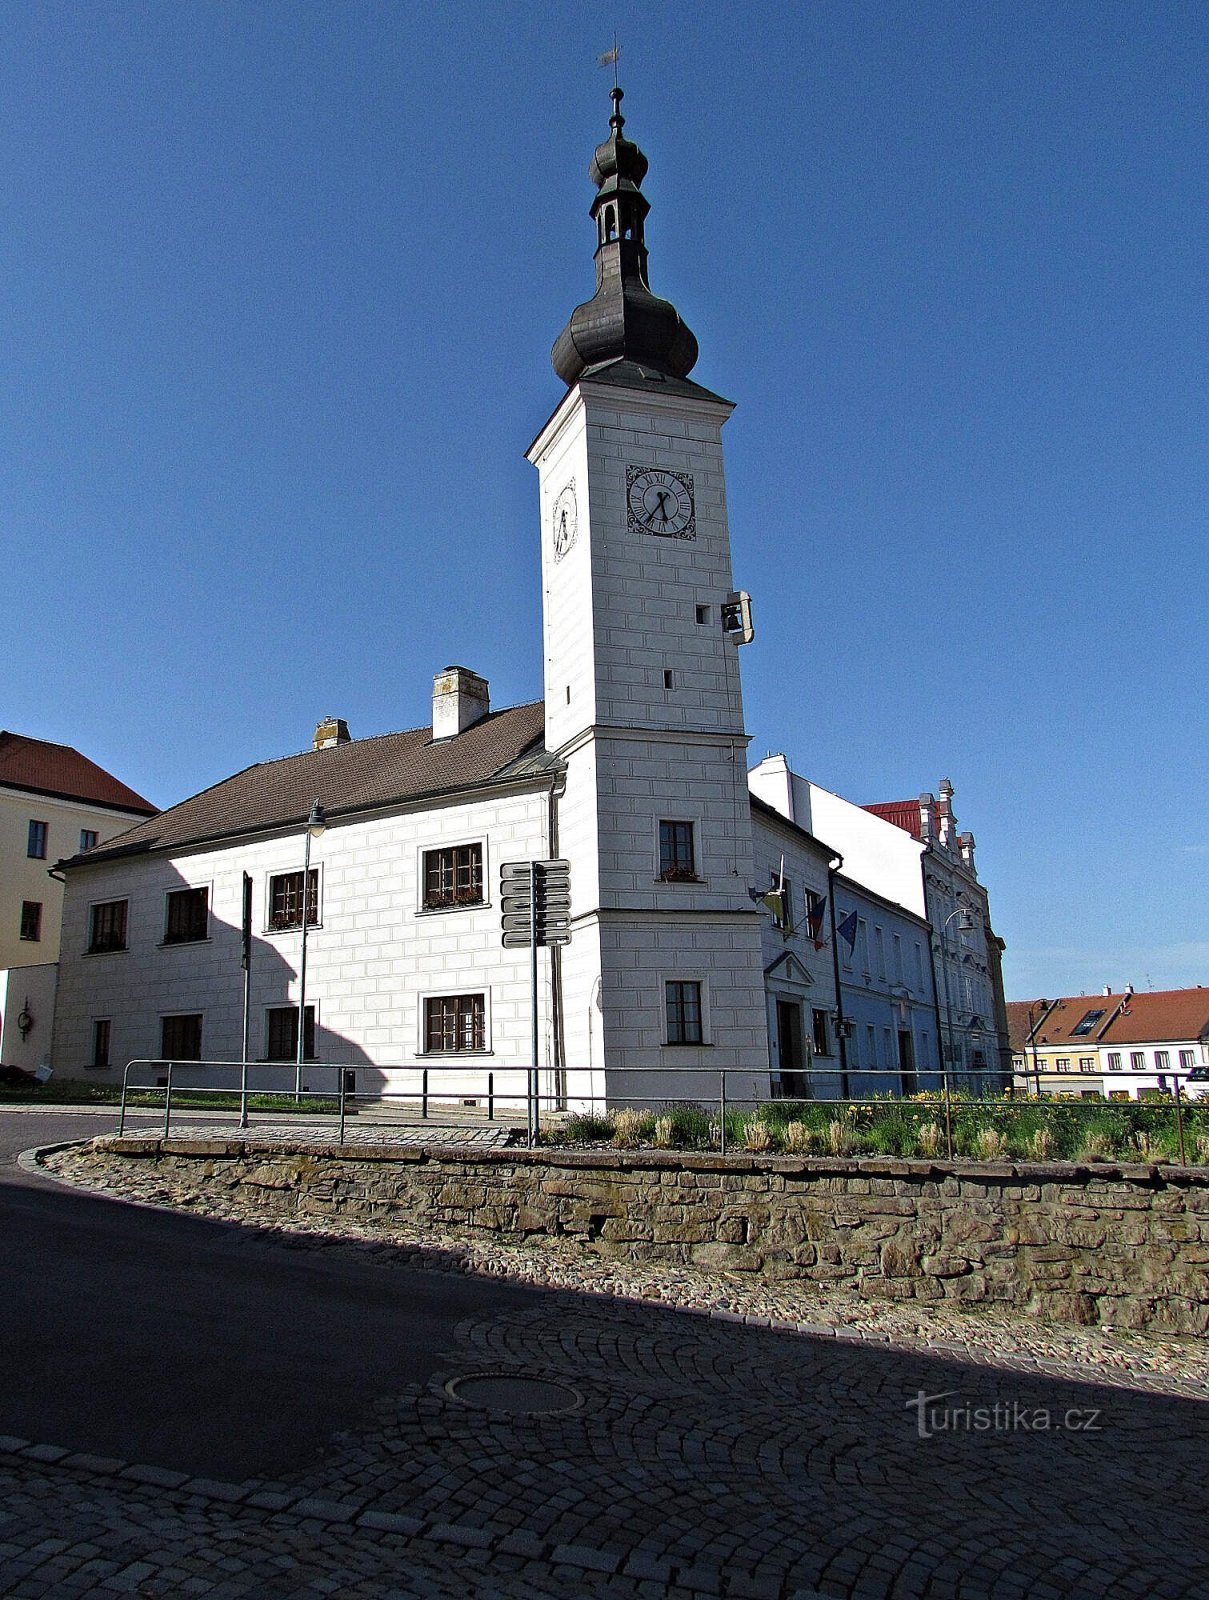 Dačice oud stadhuis